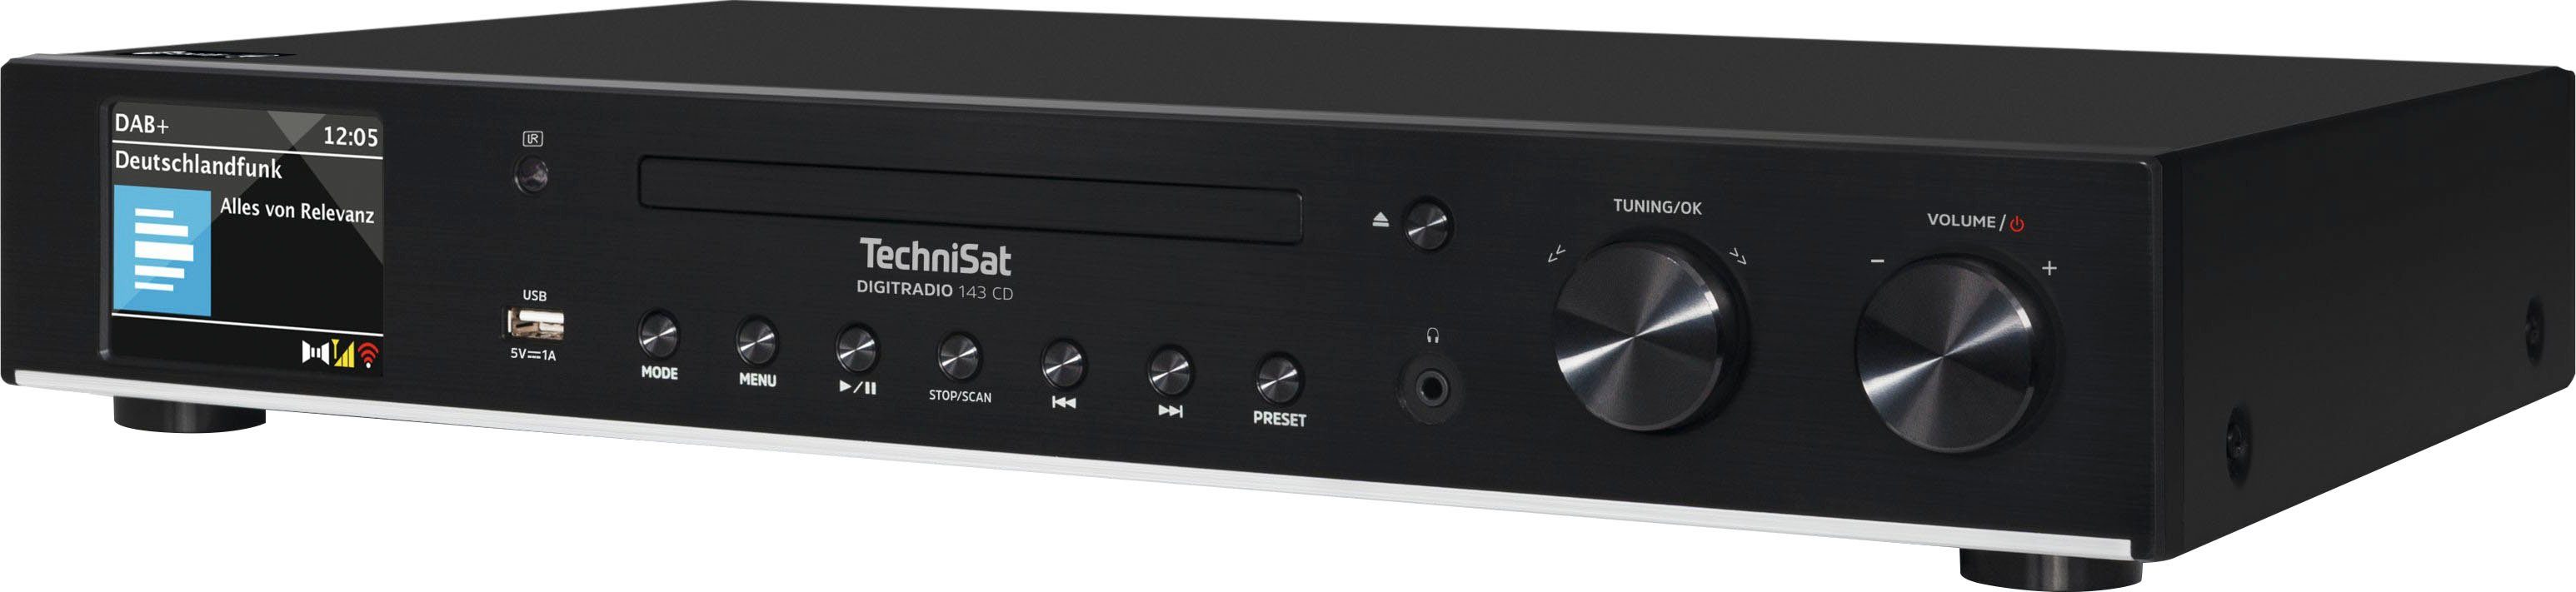 Internetradio, Digitalradio (DAB), TechniSat mit 143 (DAB) RDS) schwarz CD UKW (V3) DIGITRADIO (Digitalradio